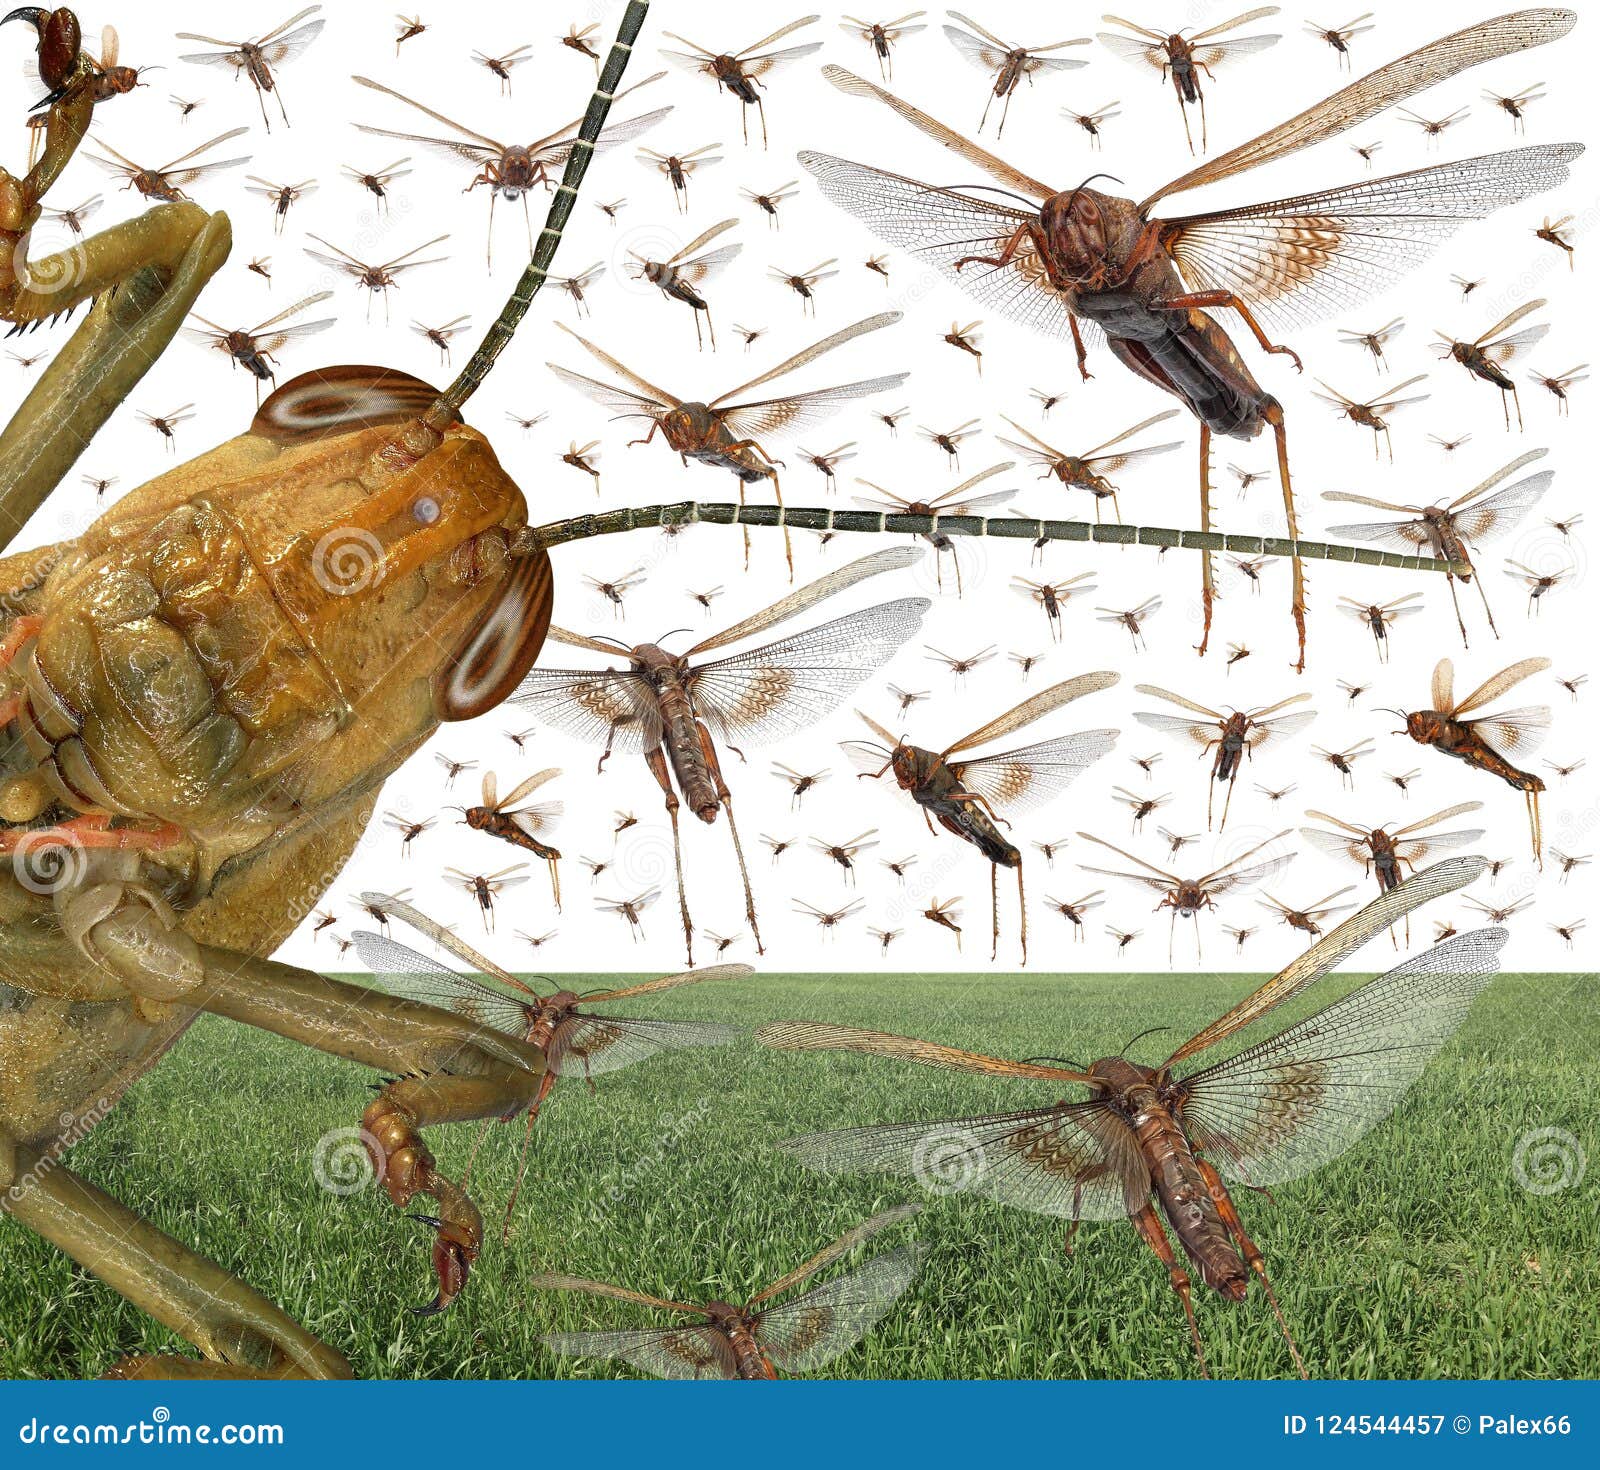 migratory locust swarm